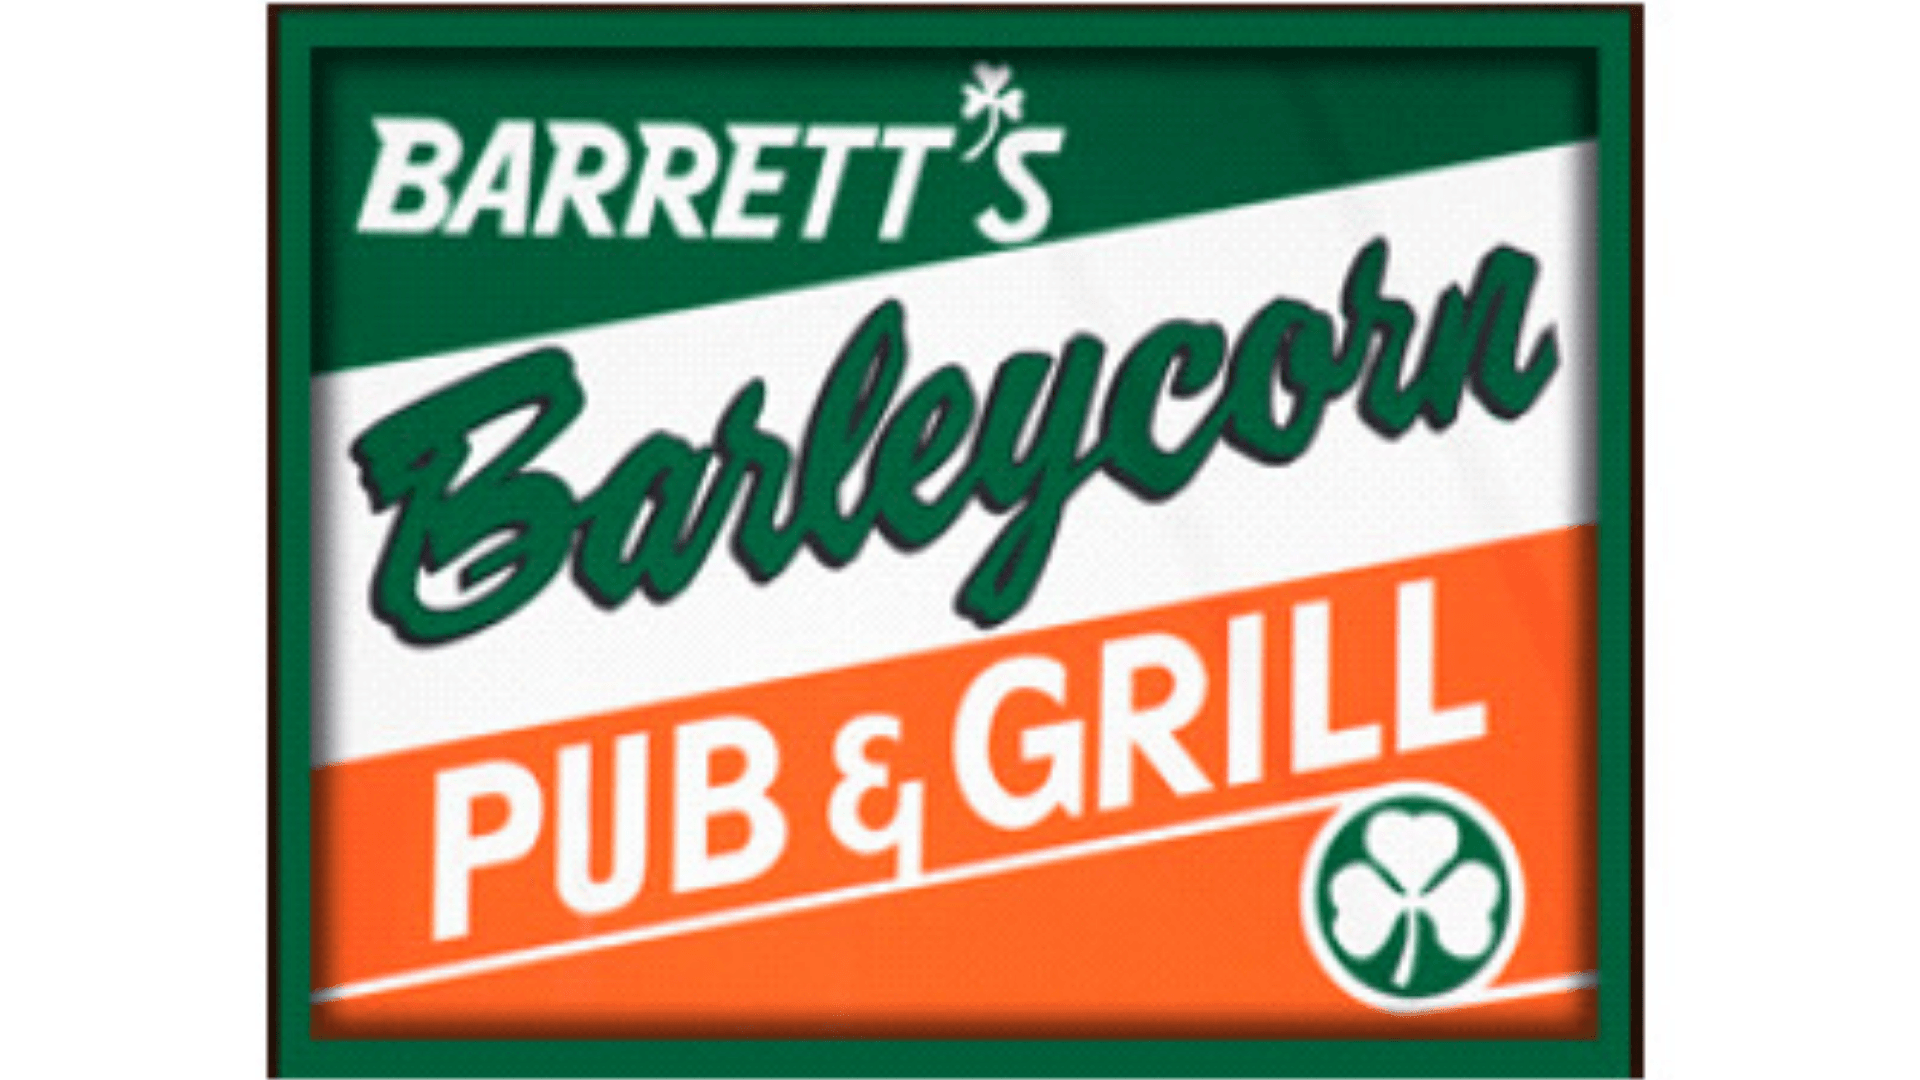 Barrett's